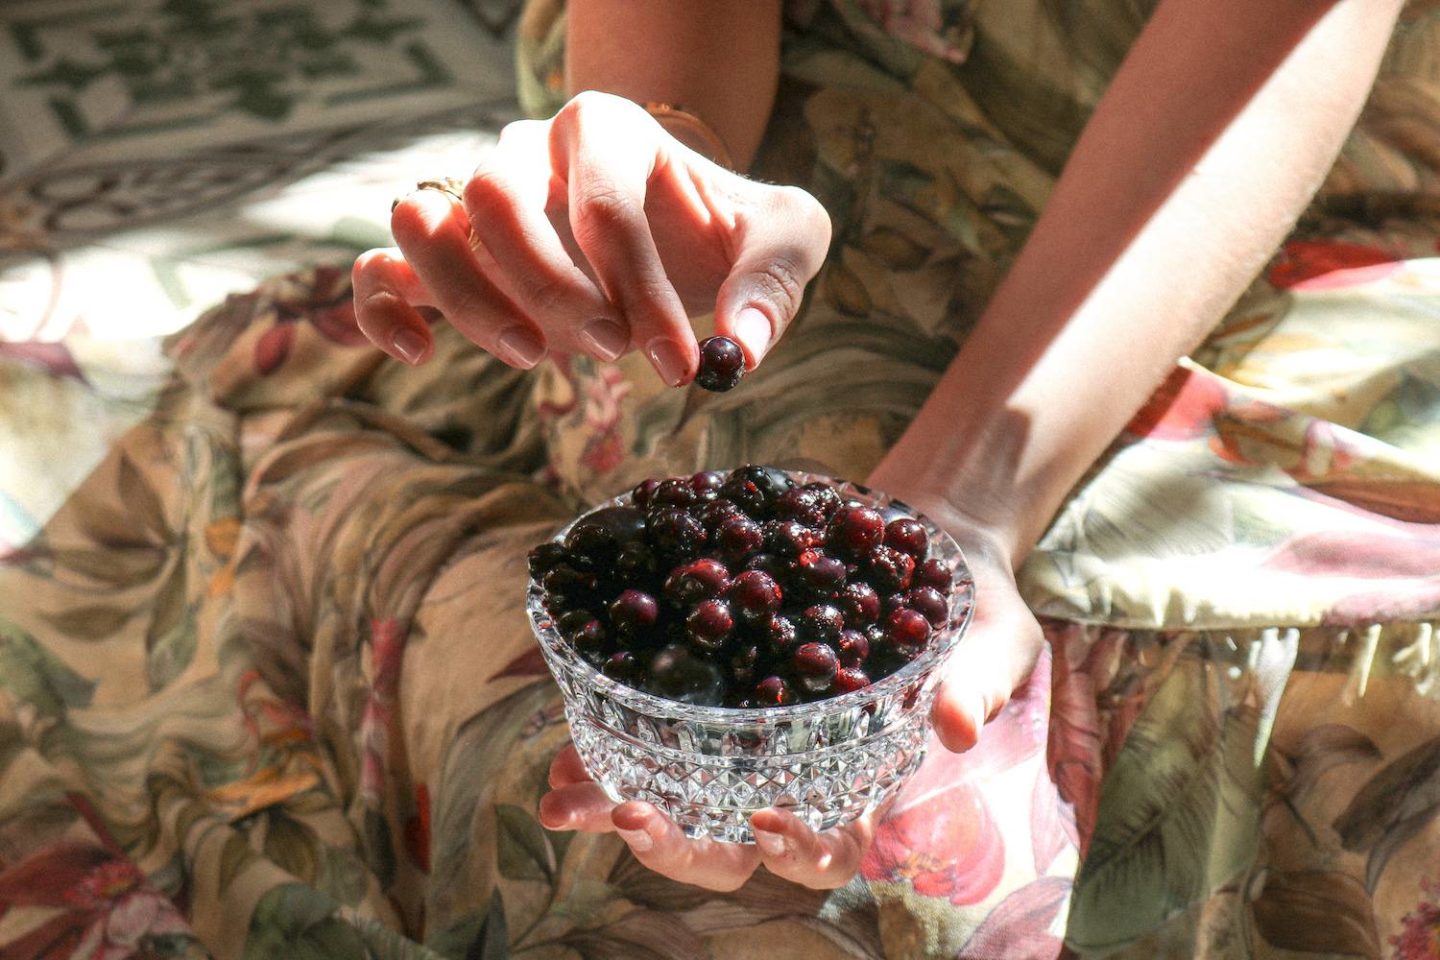 Blackcurrant berries